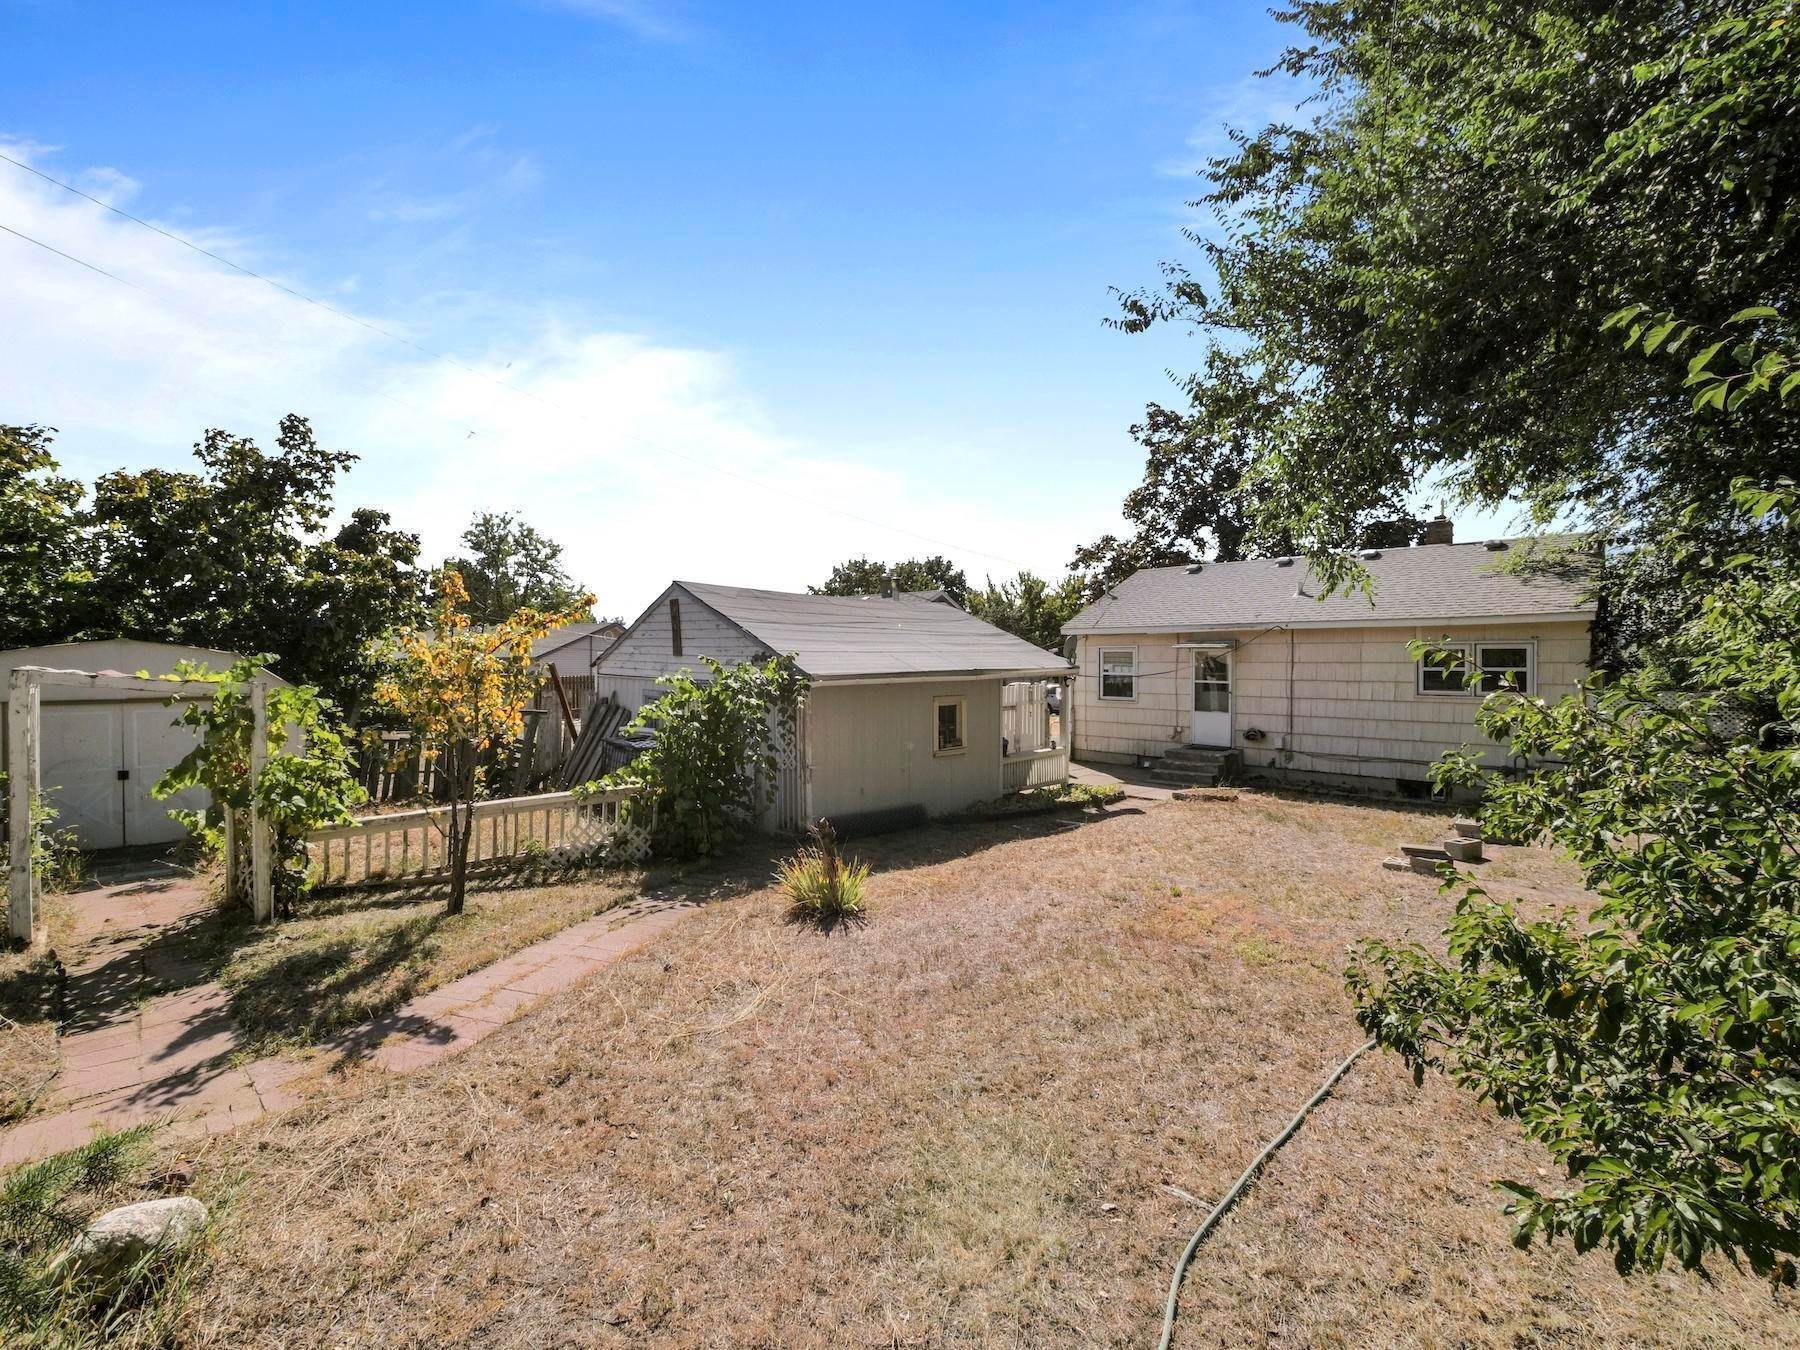 20. Single Family Homes for Sale at 6218 N Greenwood Blvd Spokane, Washington 99205 United States